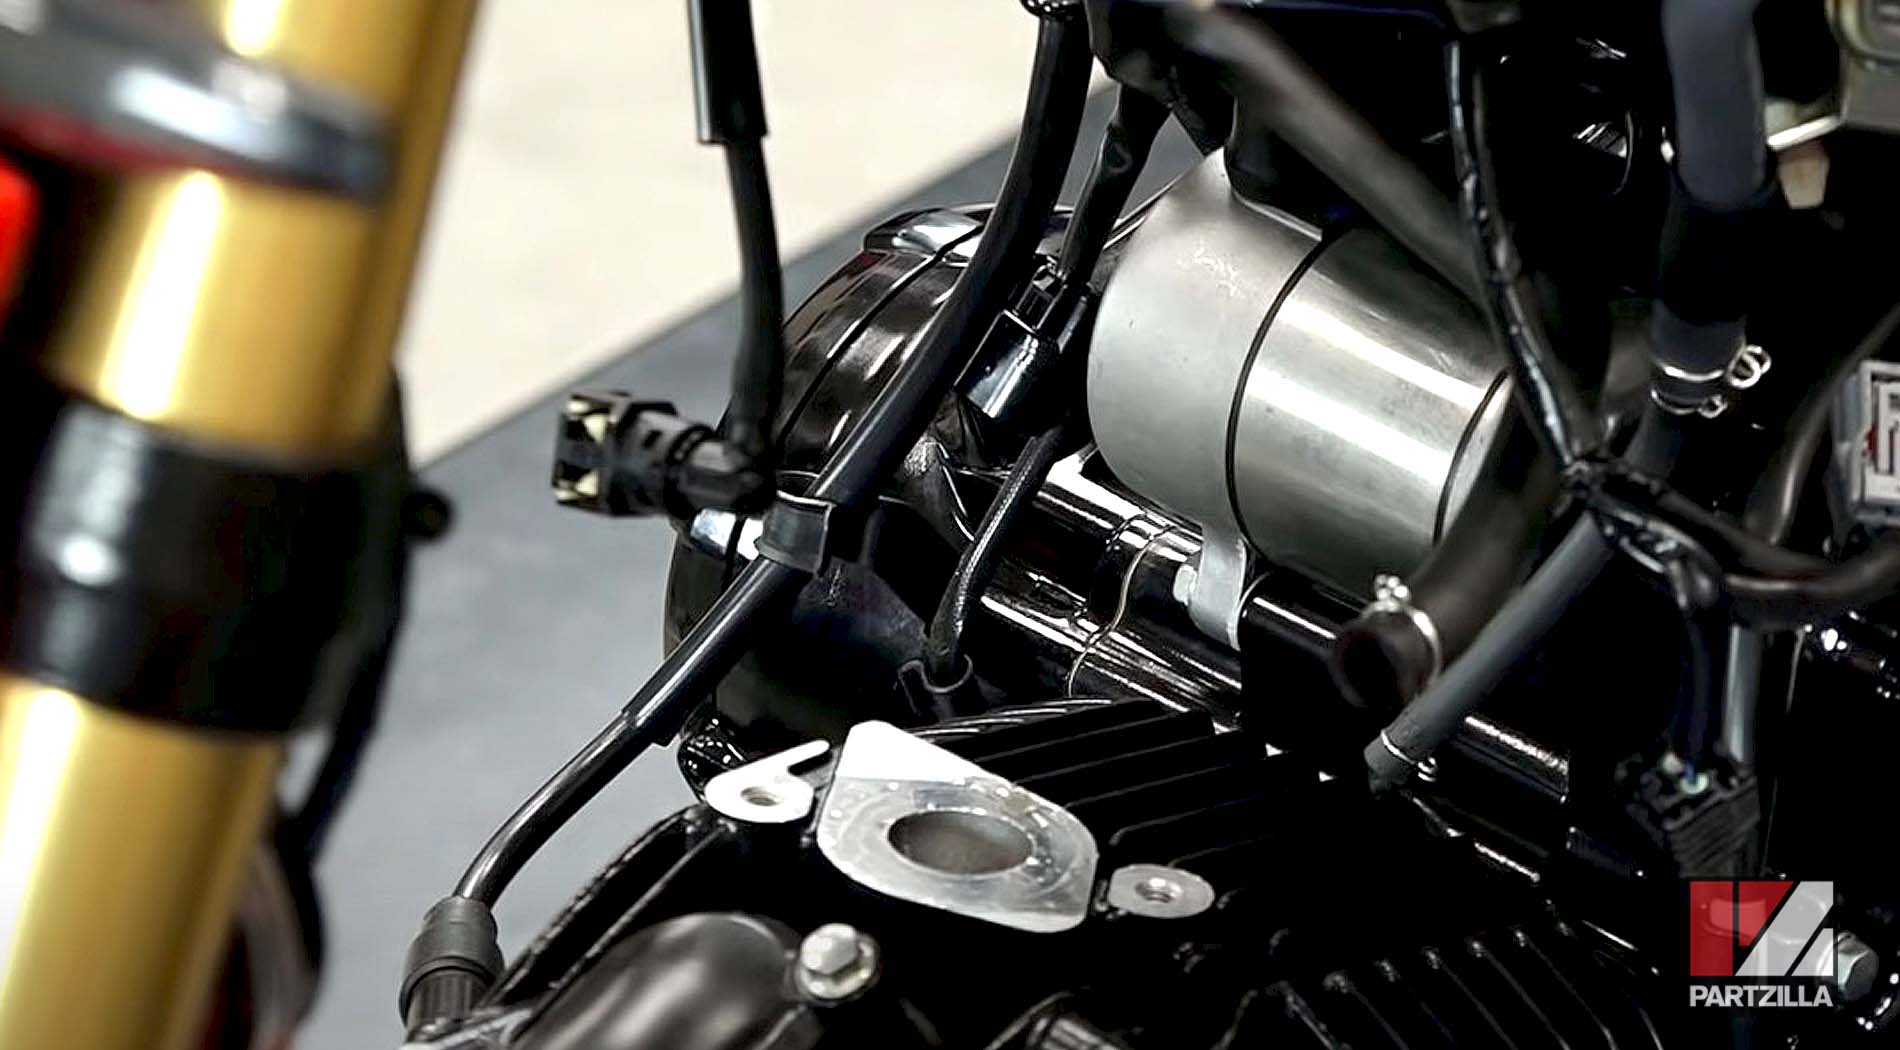 2018 Honda Grom aftermarket big bore kit cylinder head removal